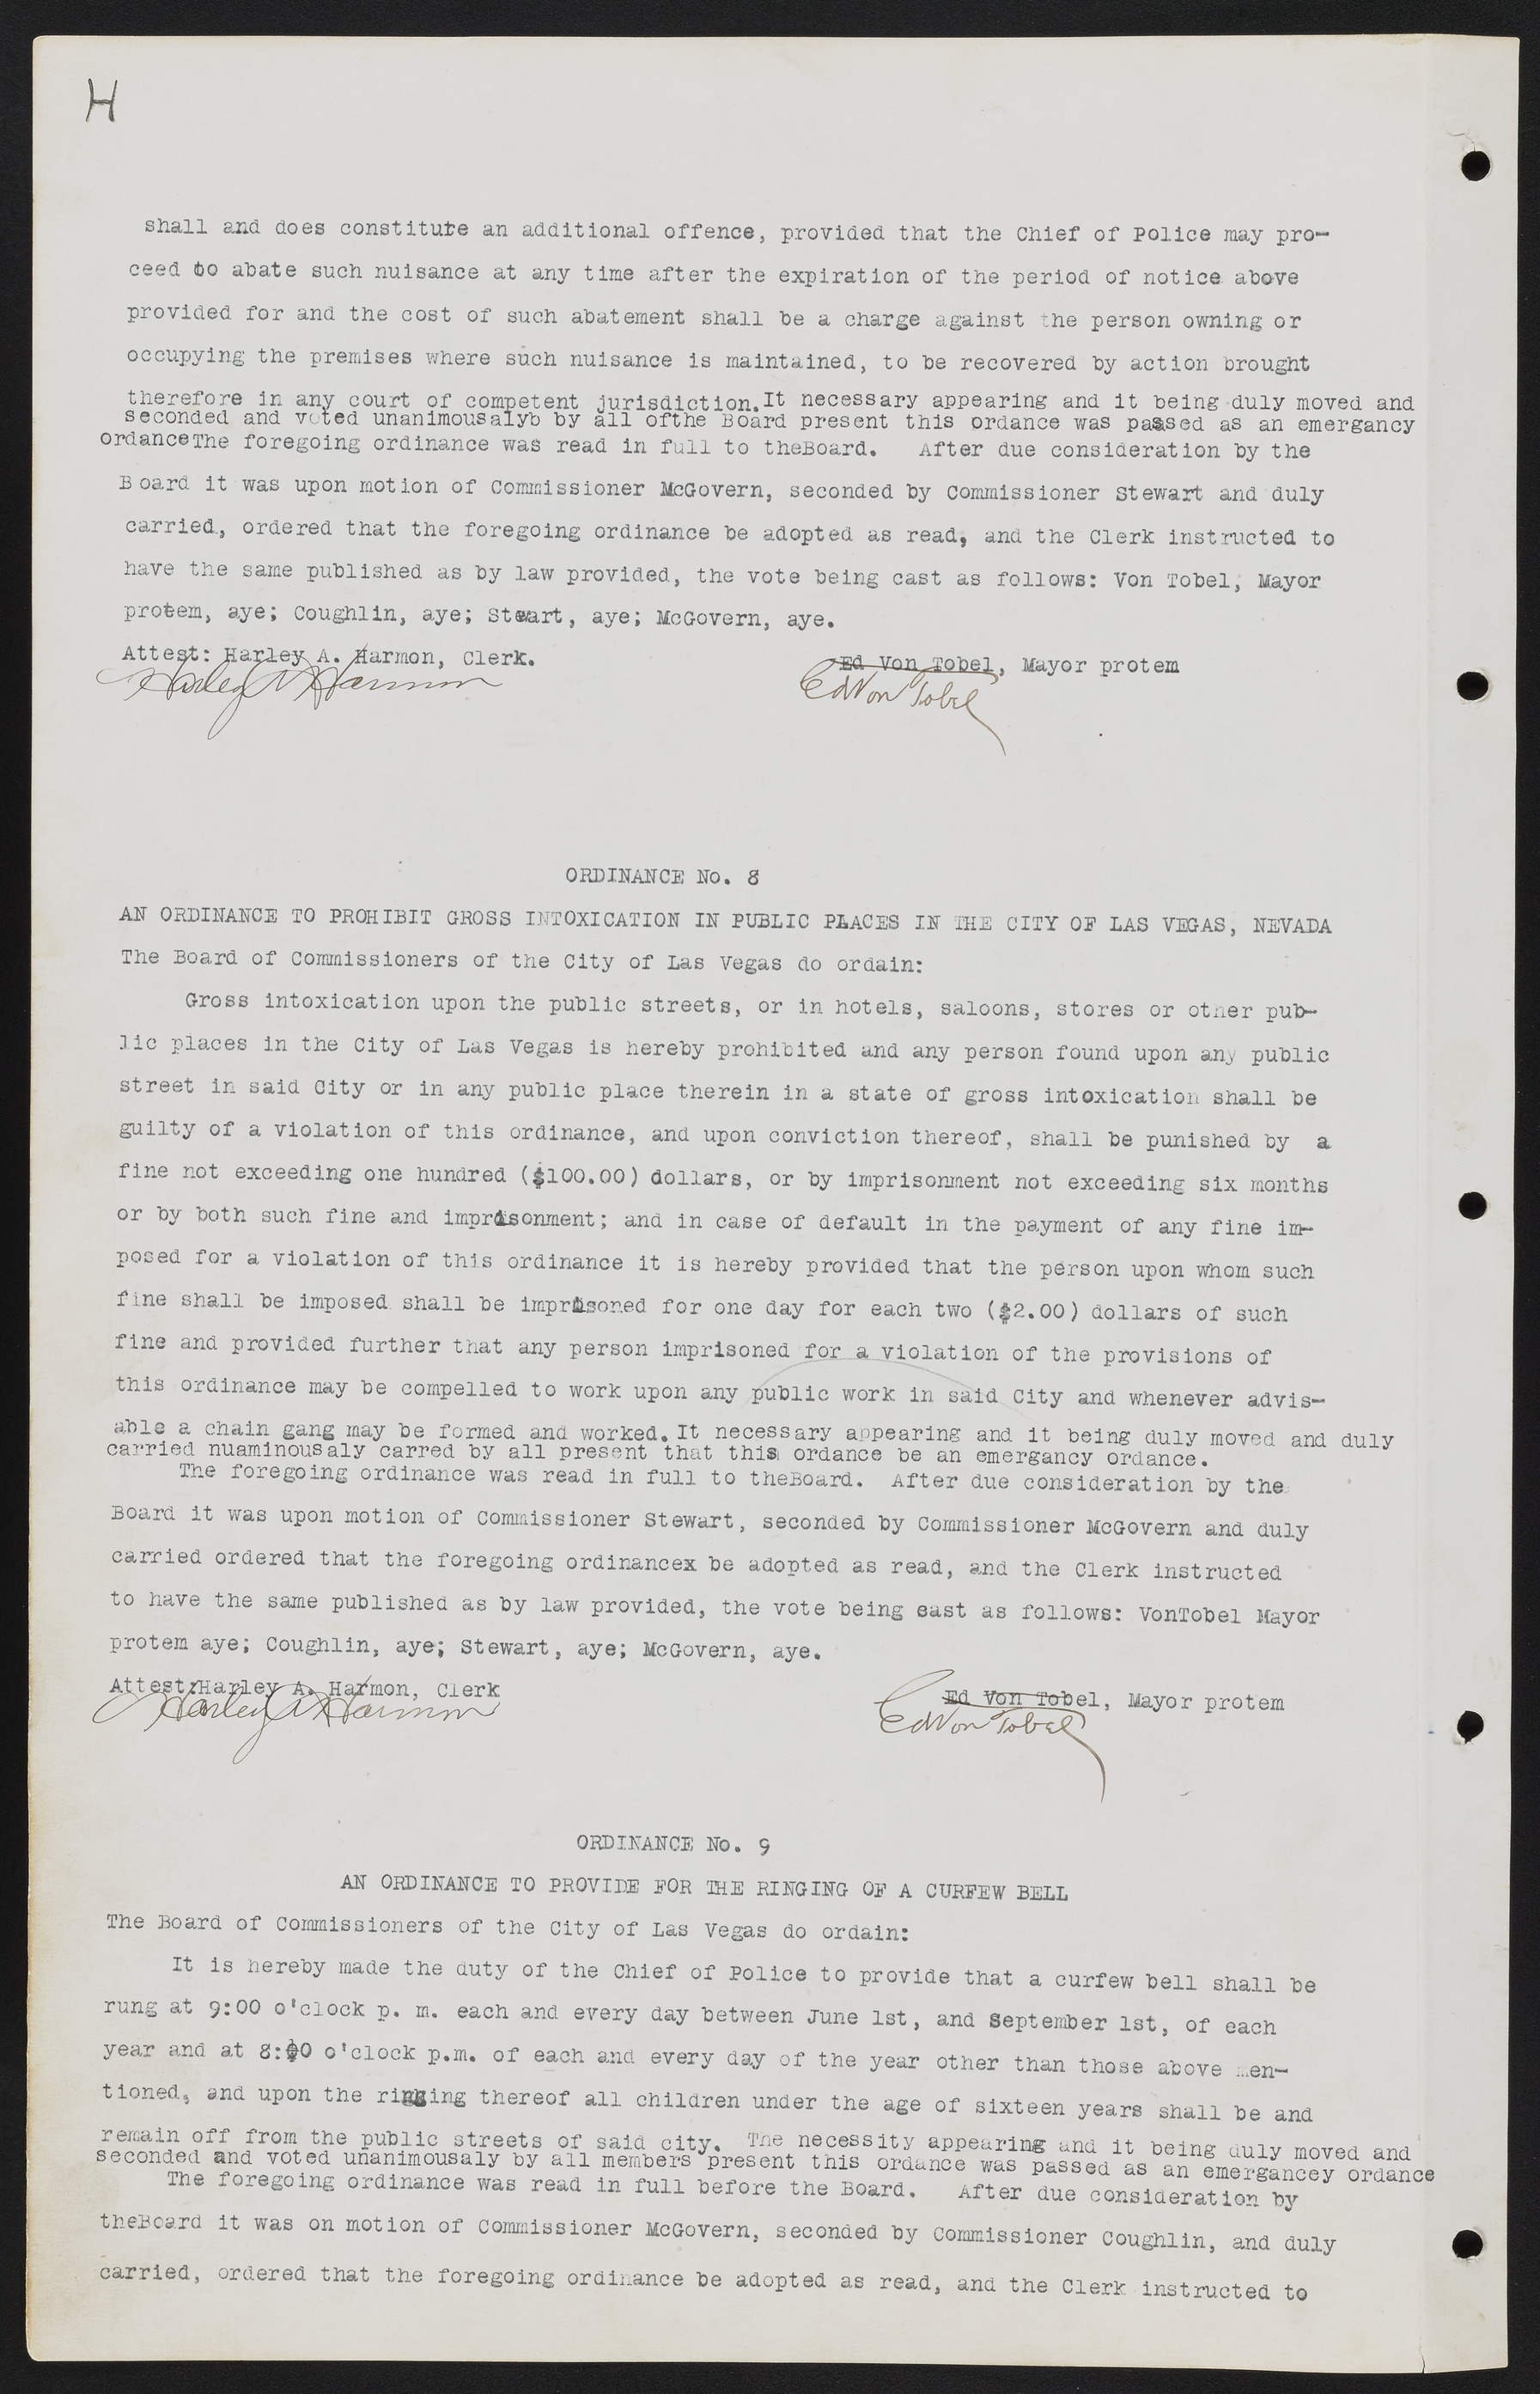 Las Vegas City Commission Minutes, June 22, 1911 to February 7, 1922, lvc000001-10